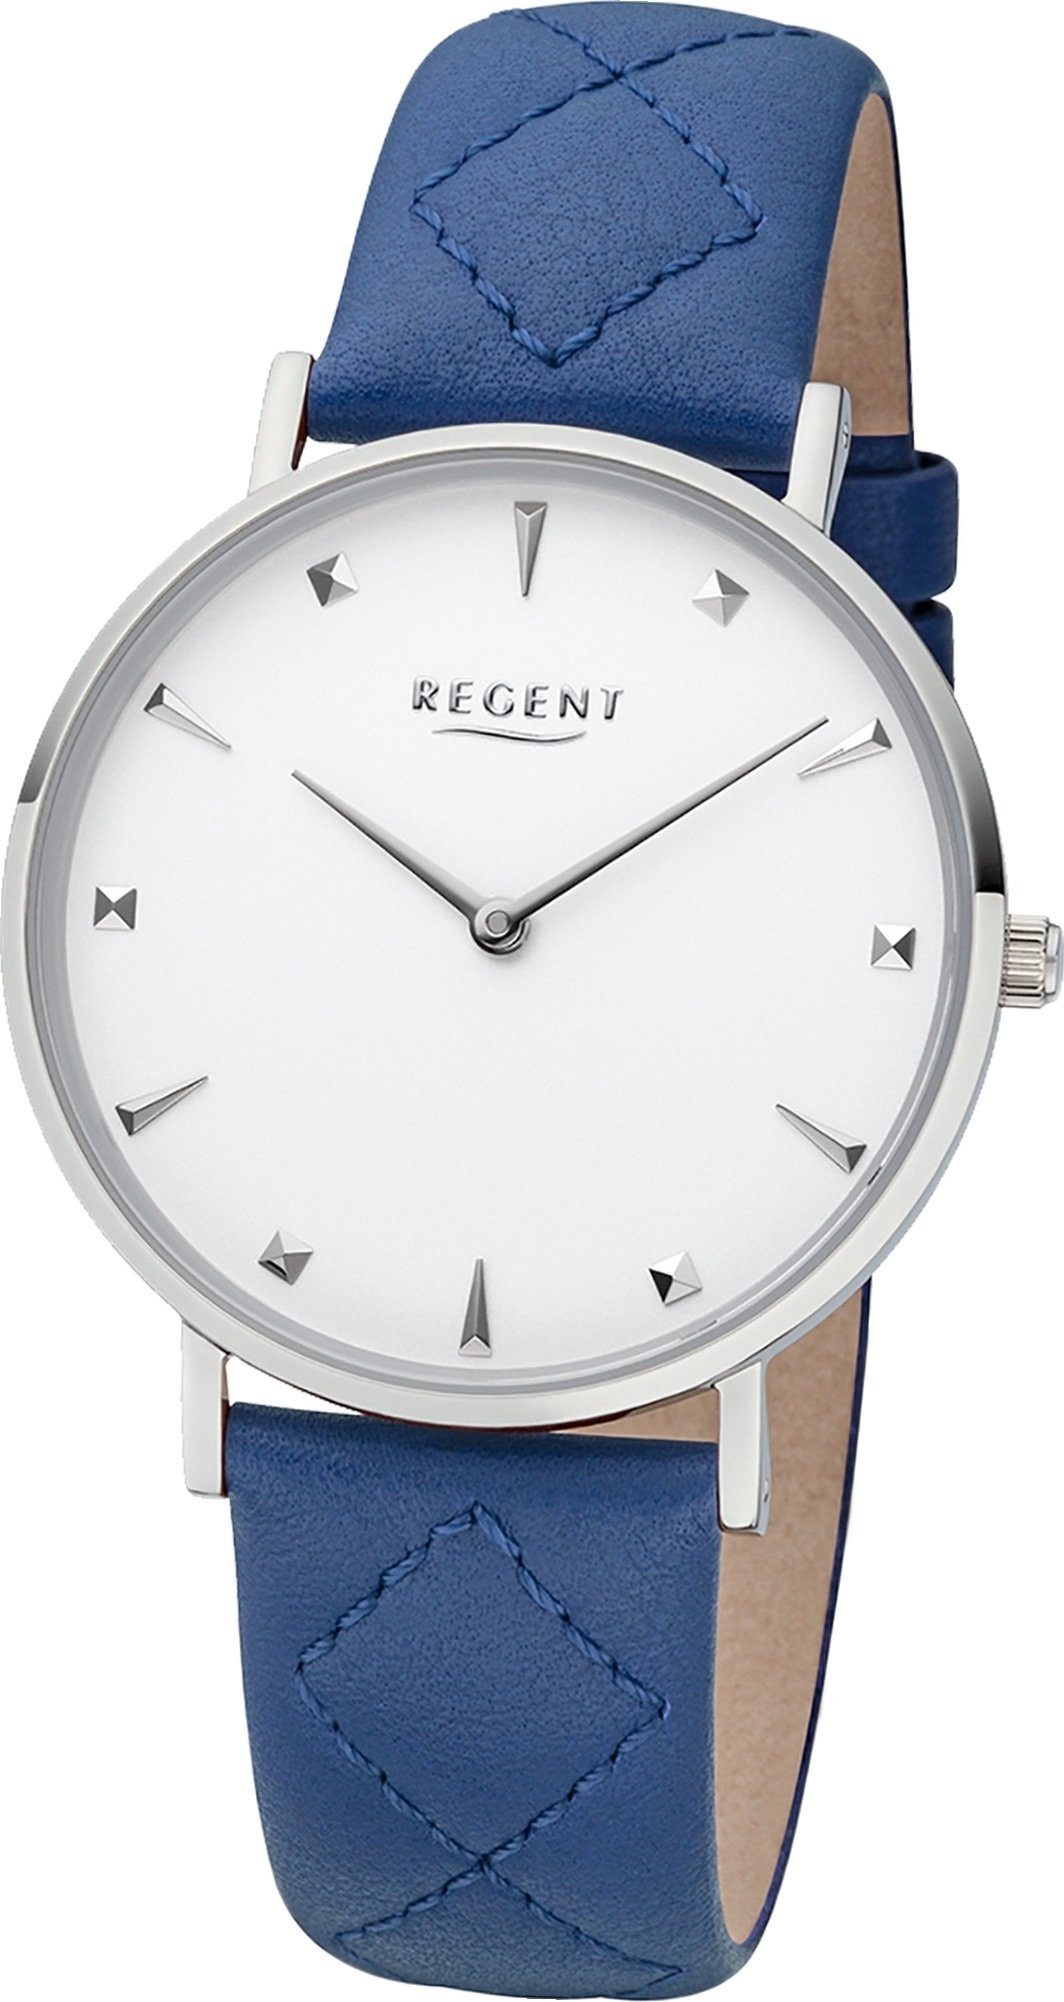 Regent Quarzuhr Regent Leder Damen Uhr BA-573 Quarz, Damenuhr Lederarmband blau, rundes Gehäuse, mittel (ca. 36mm)